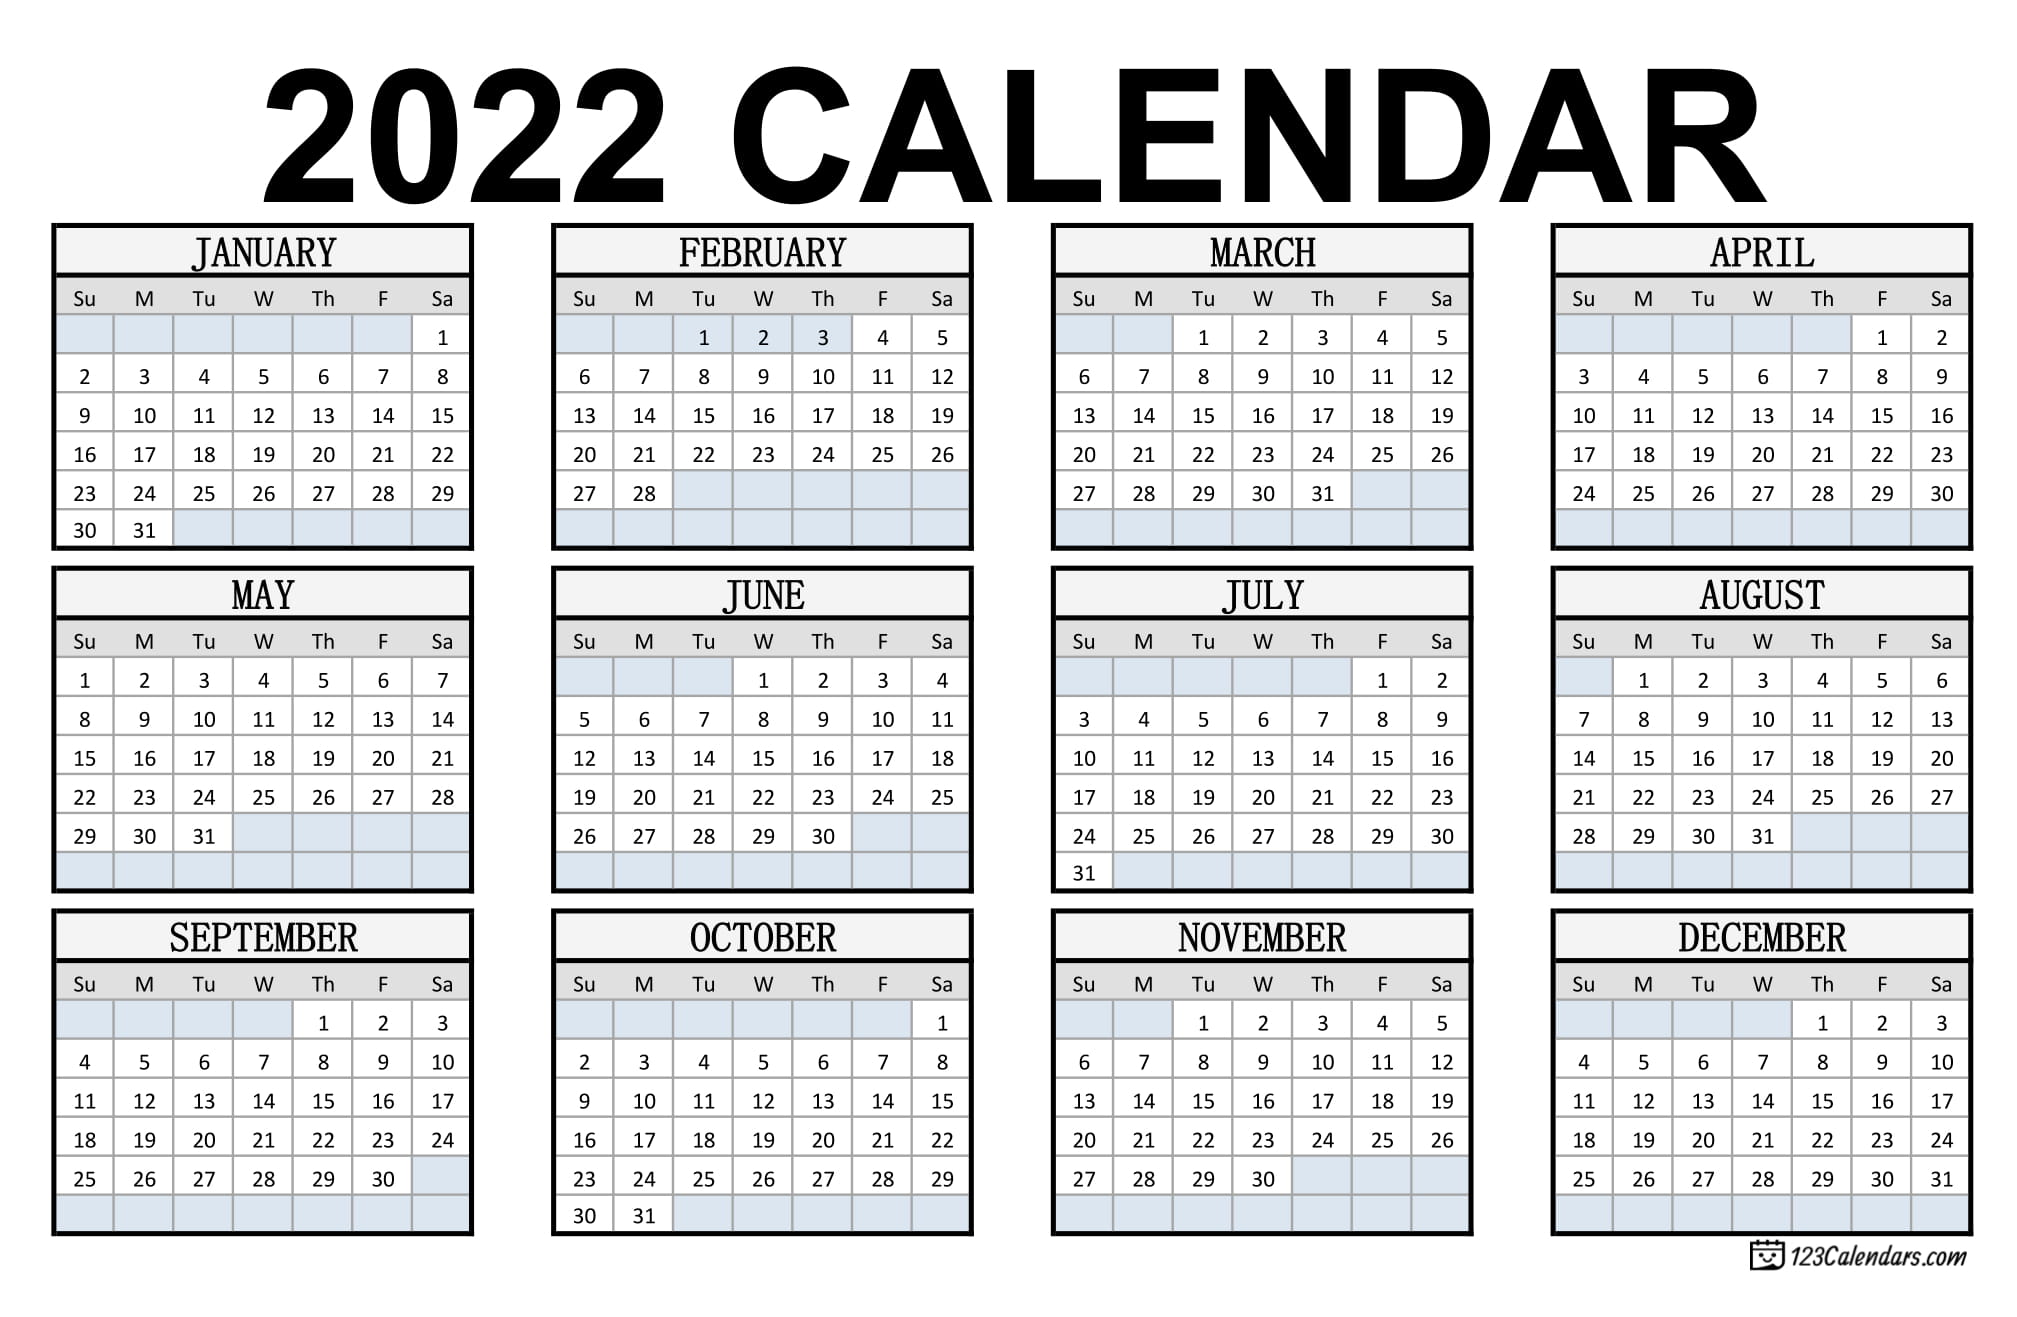 Large Print Calendar 2022 Year 2022 Calendar Templates | 123Calendars.com